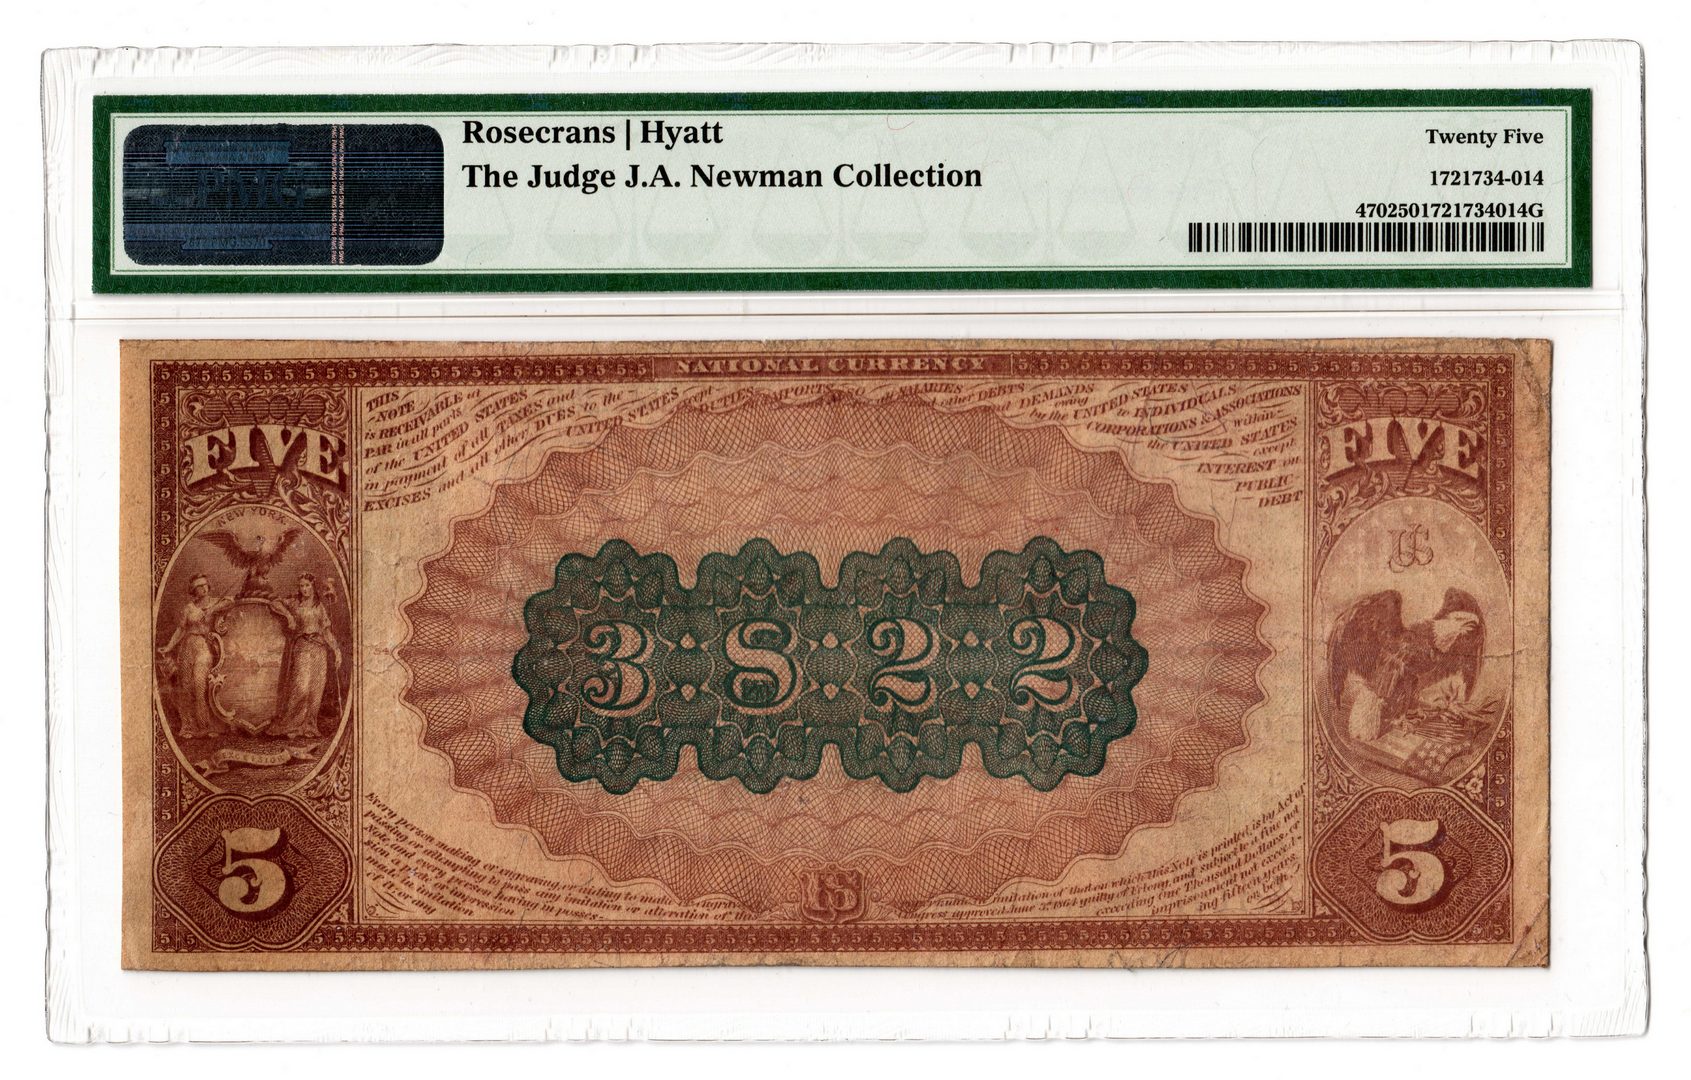 Lot 103: 1882 $5 Sidney National Bank of New York National